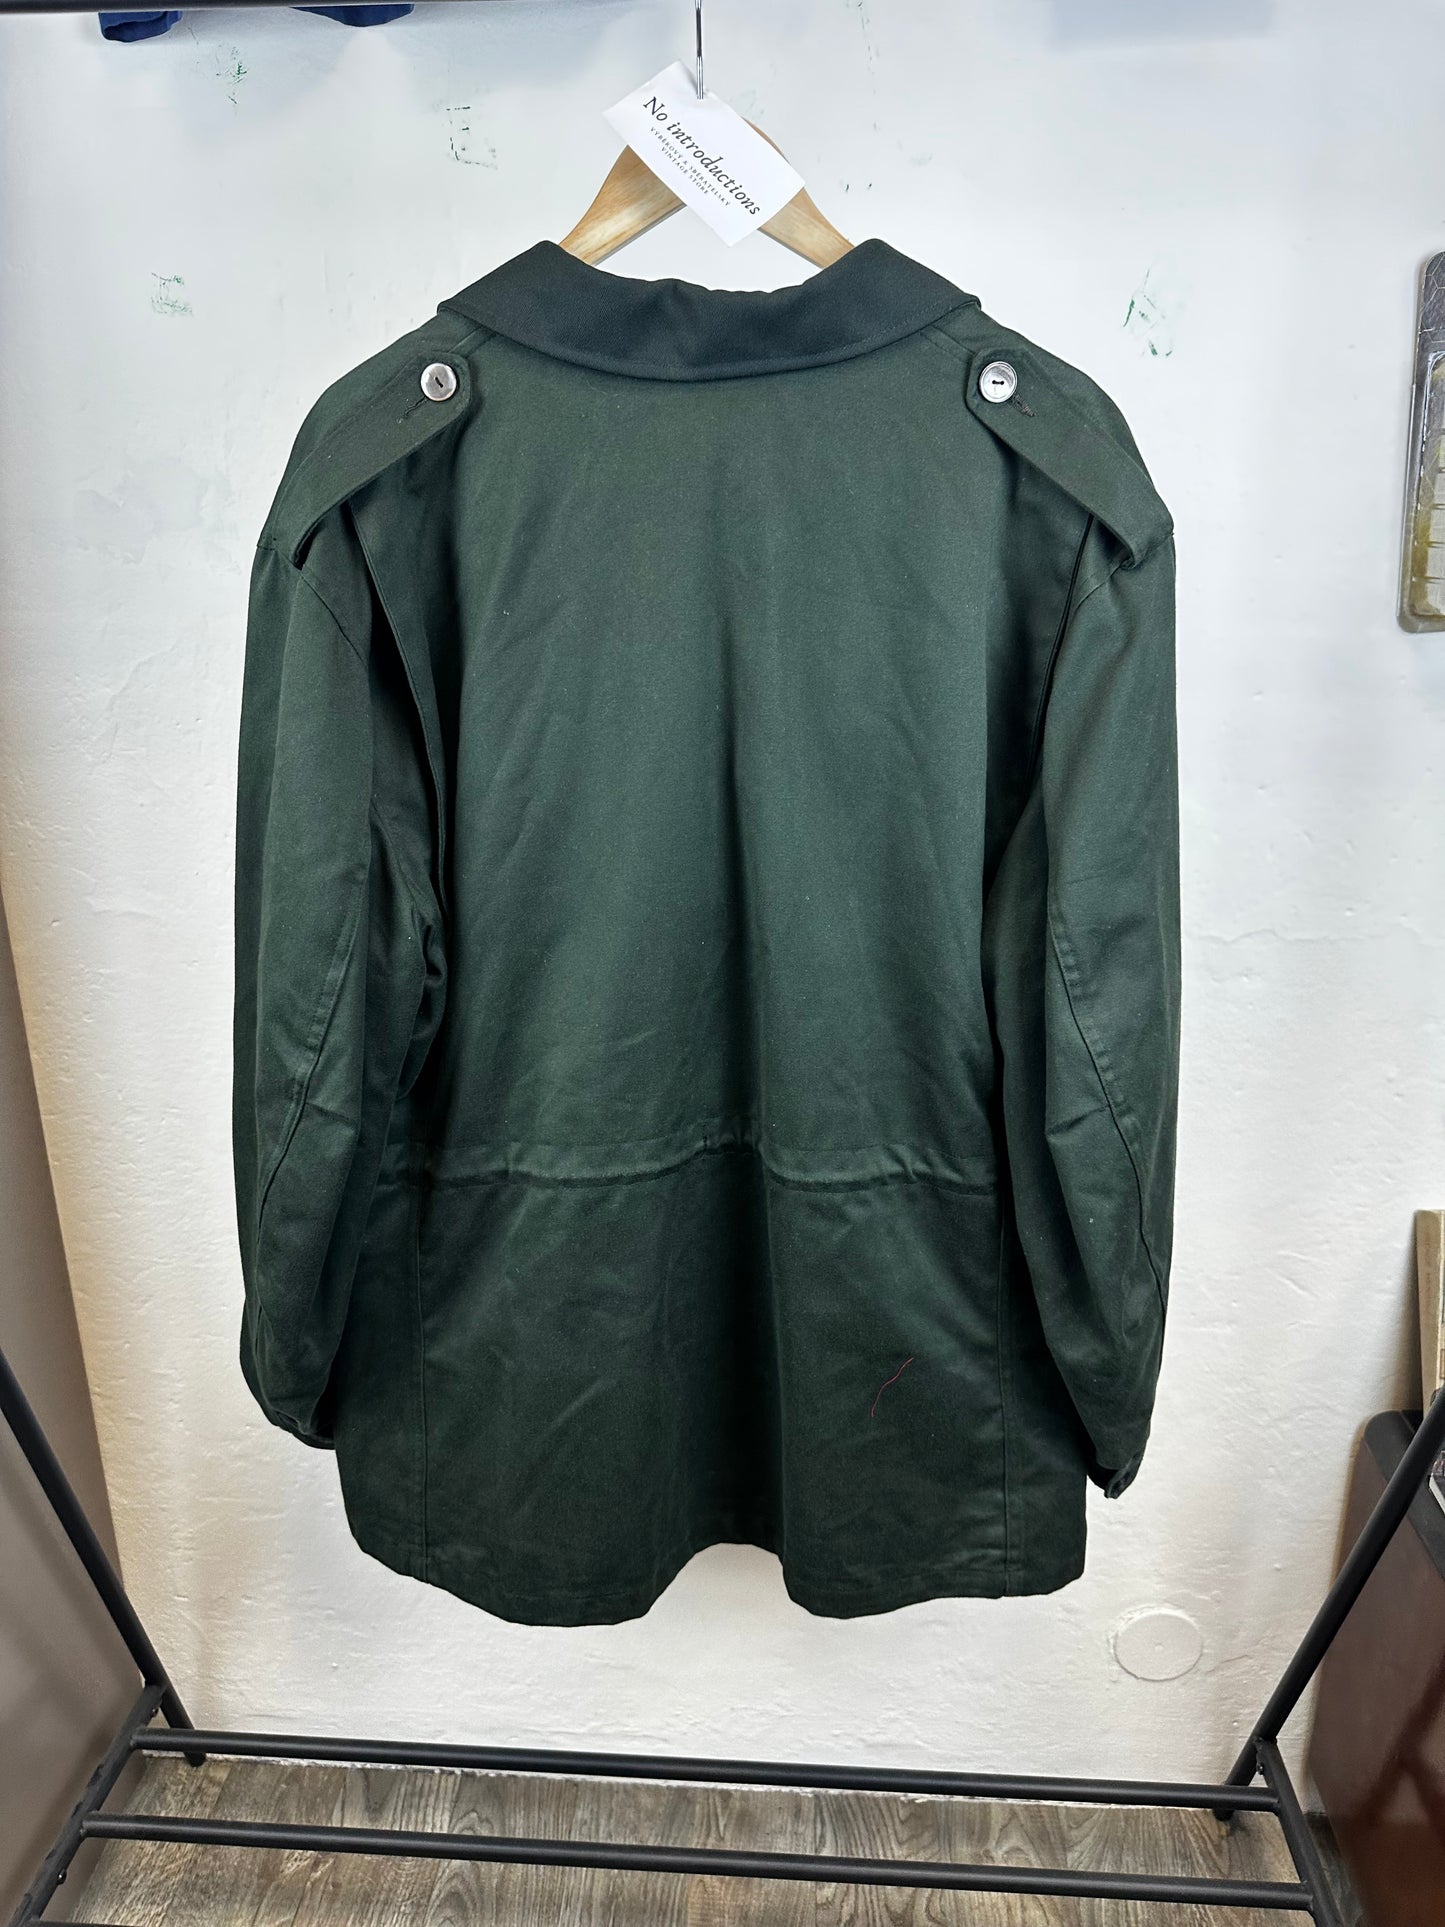 Vintage Army Jacket 1984 - size L